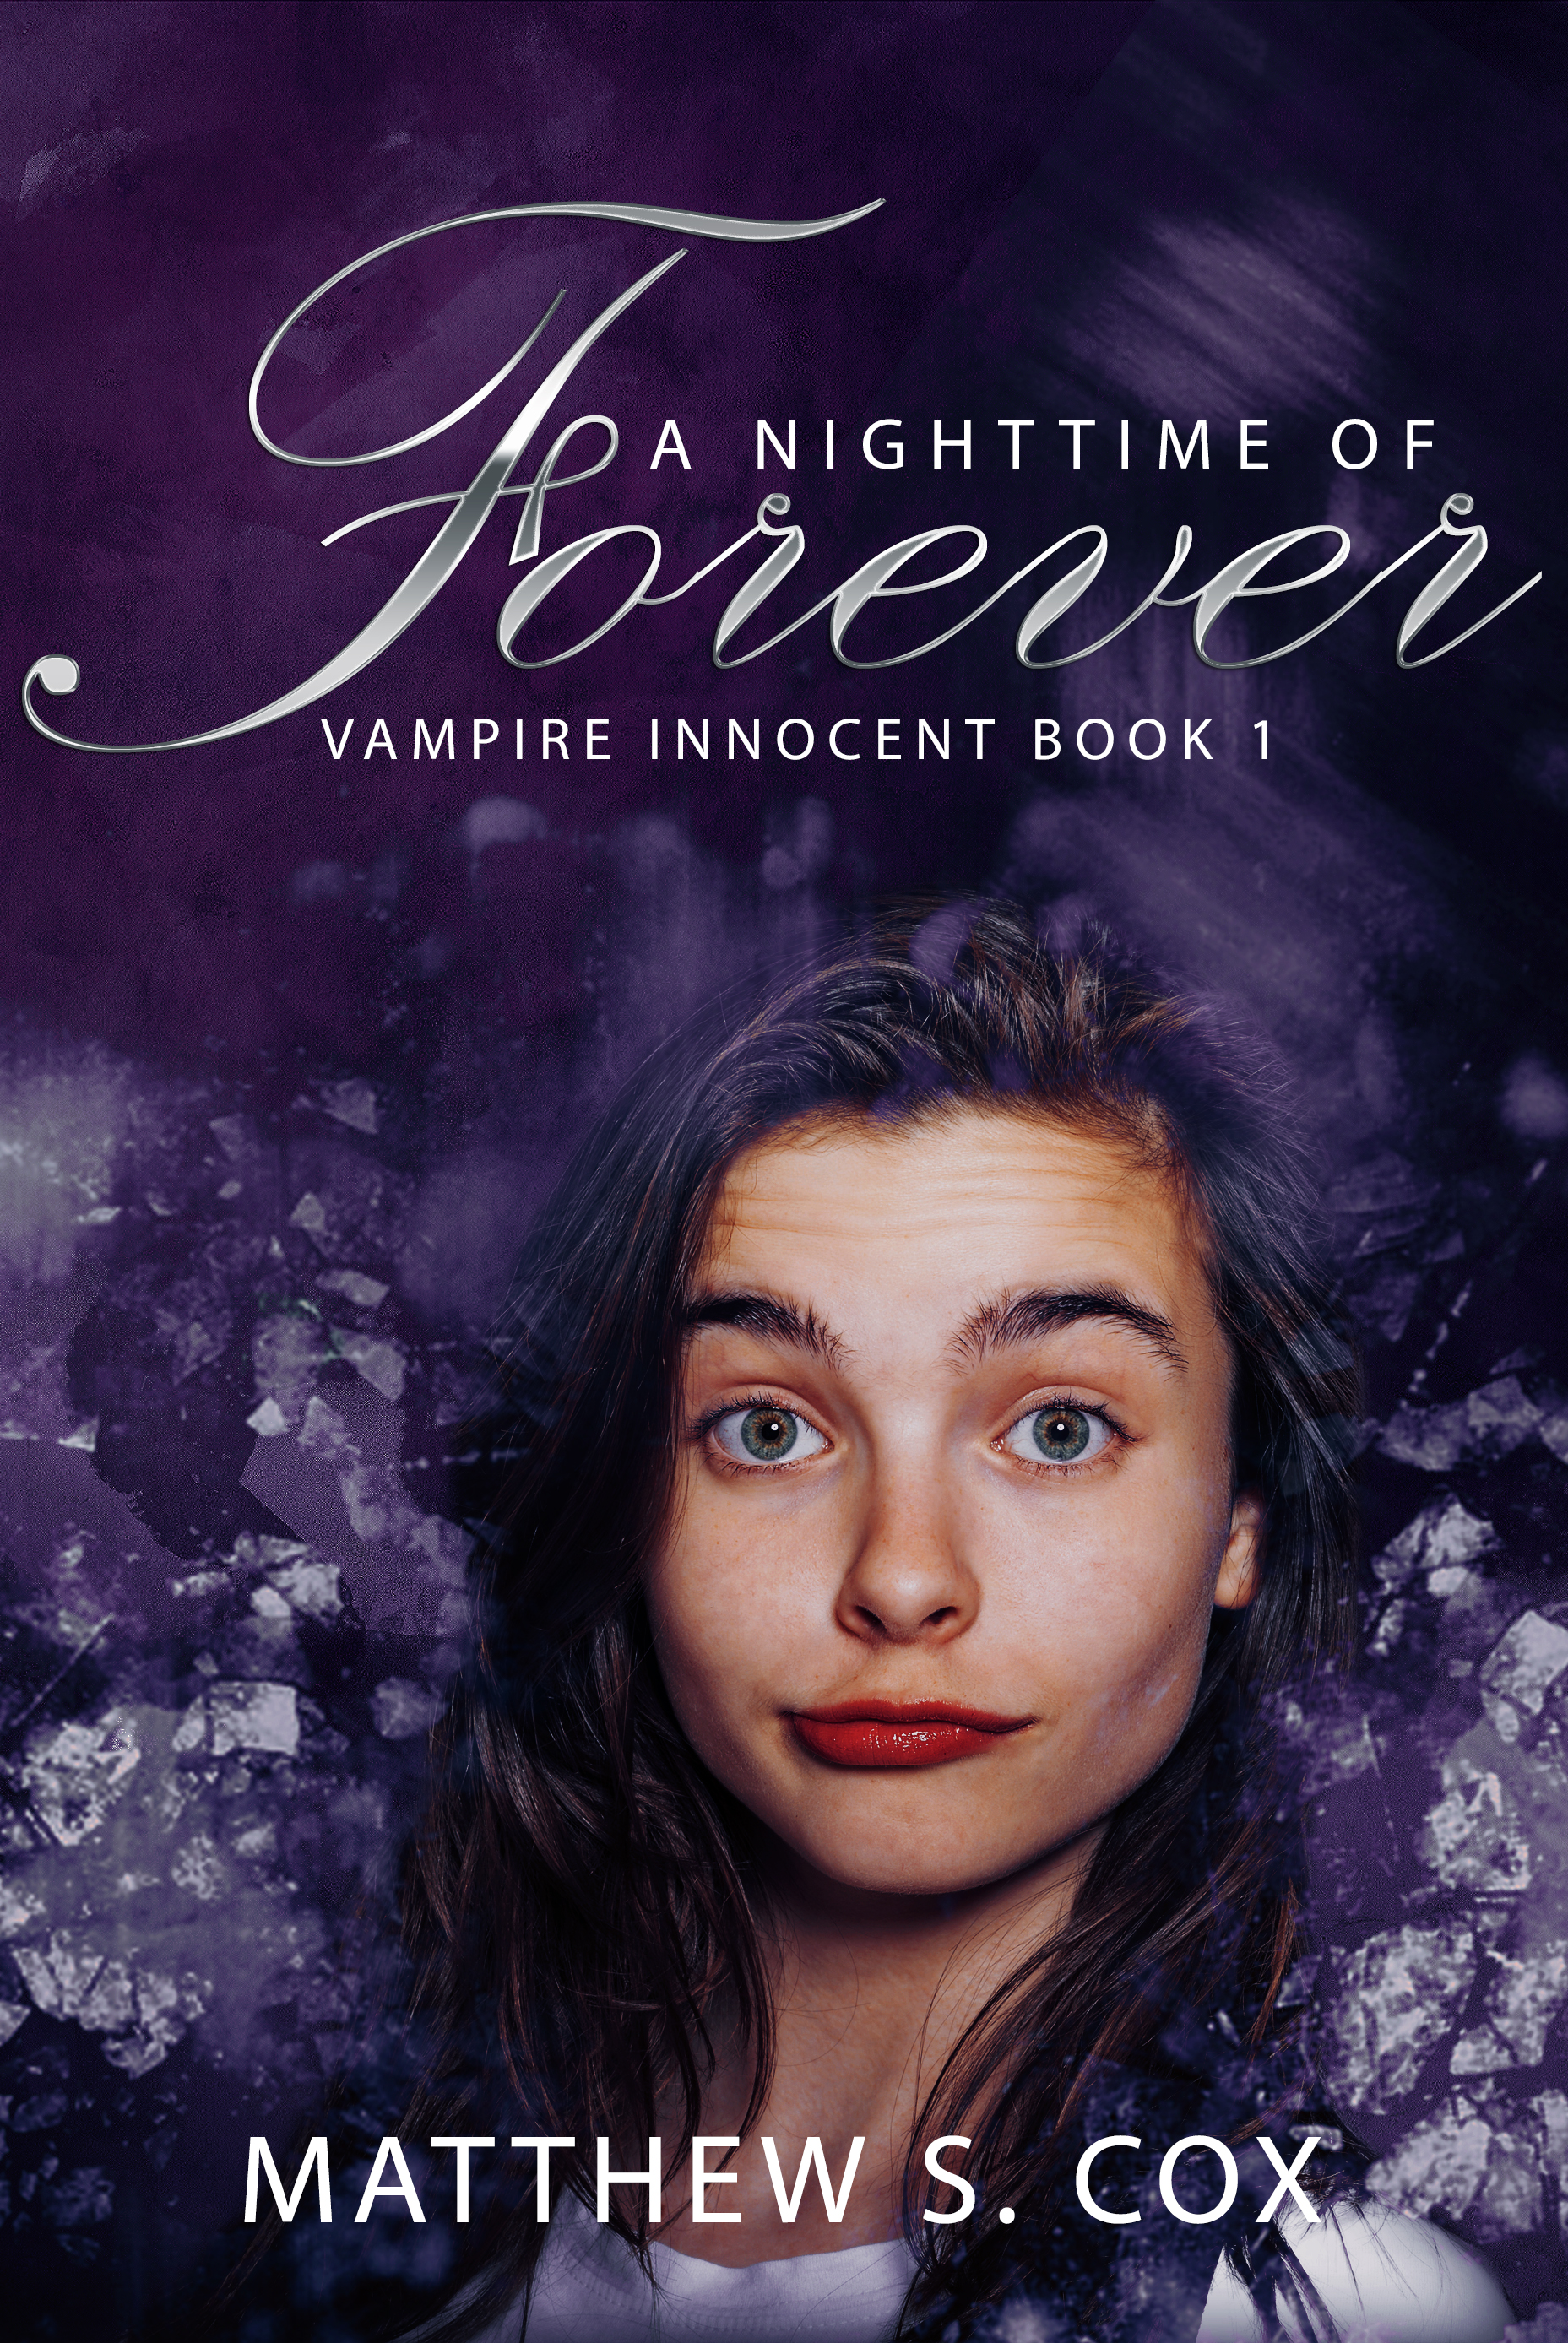 Vampire Innocent book one - dark comedy, vampires, and magic.